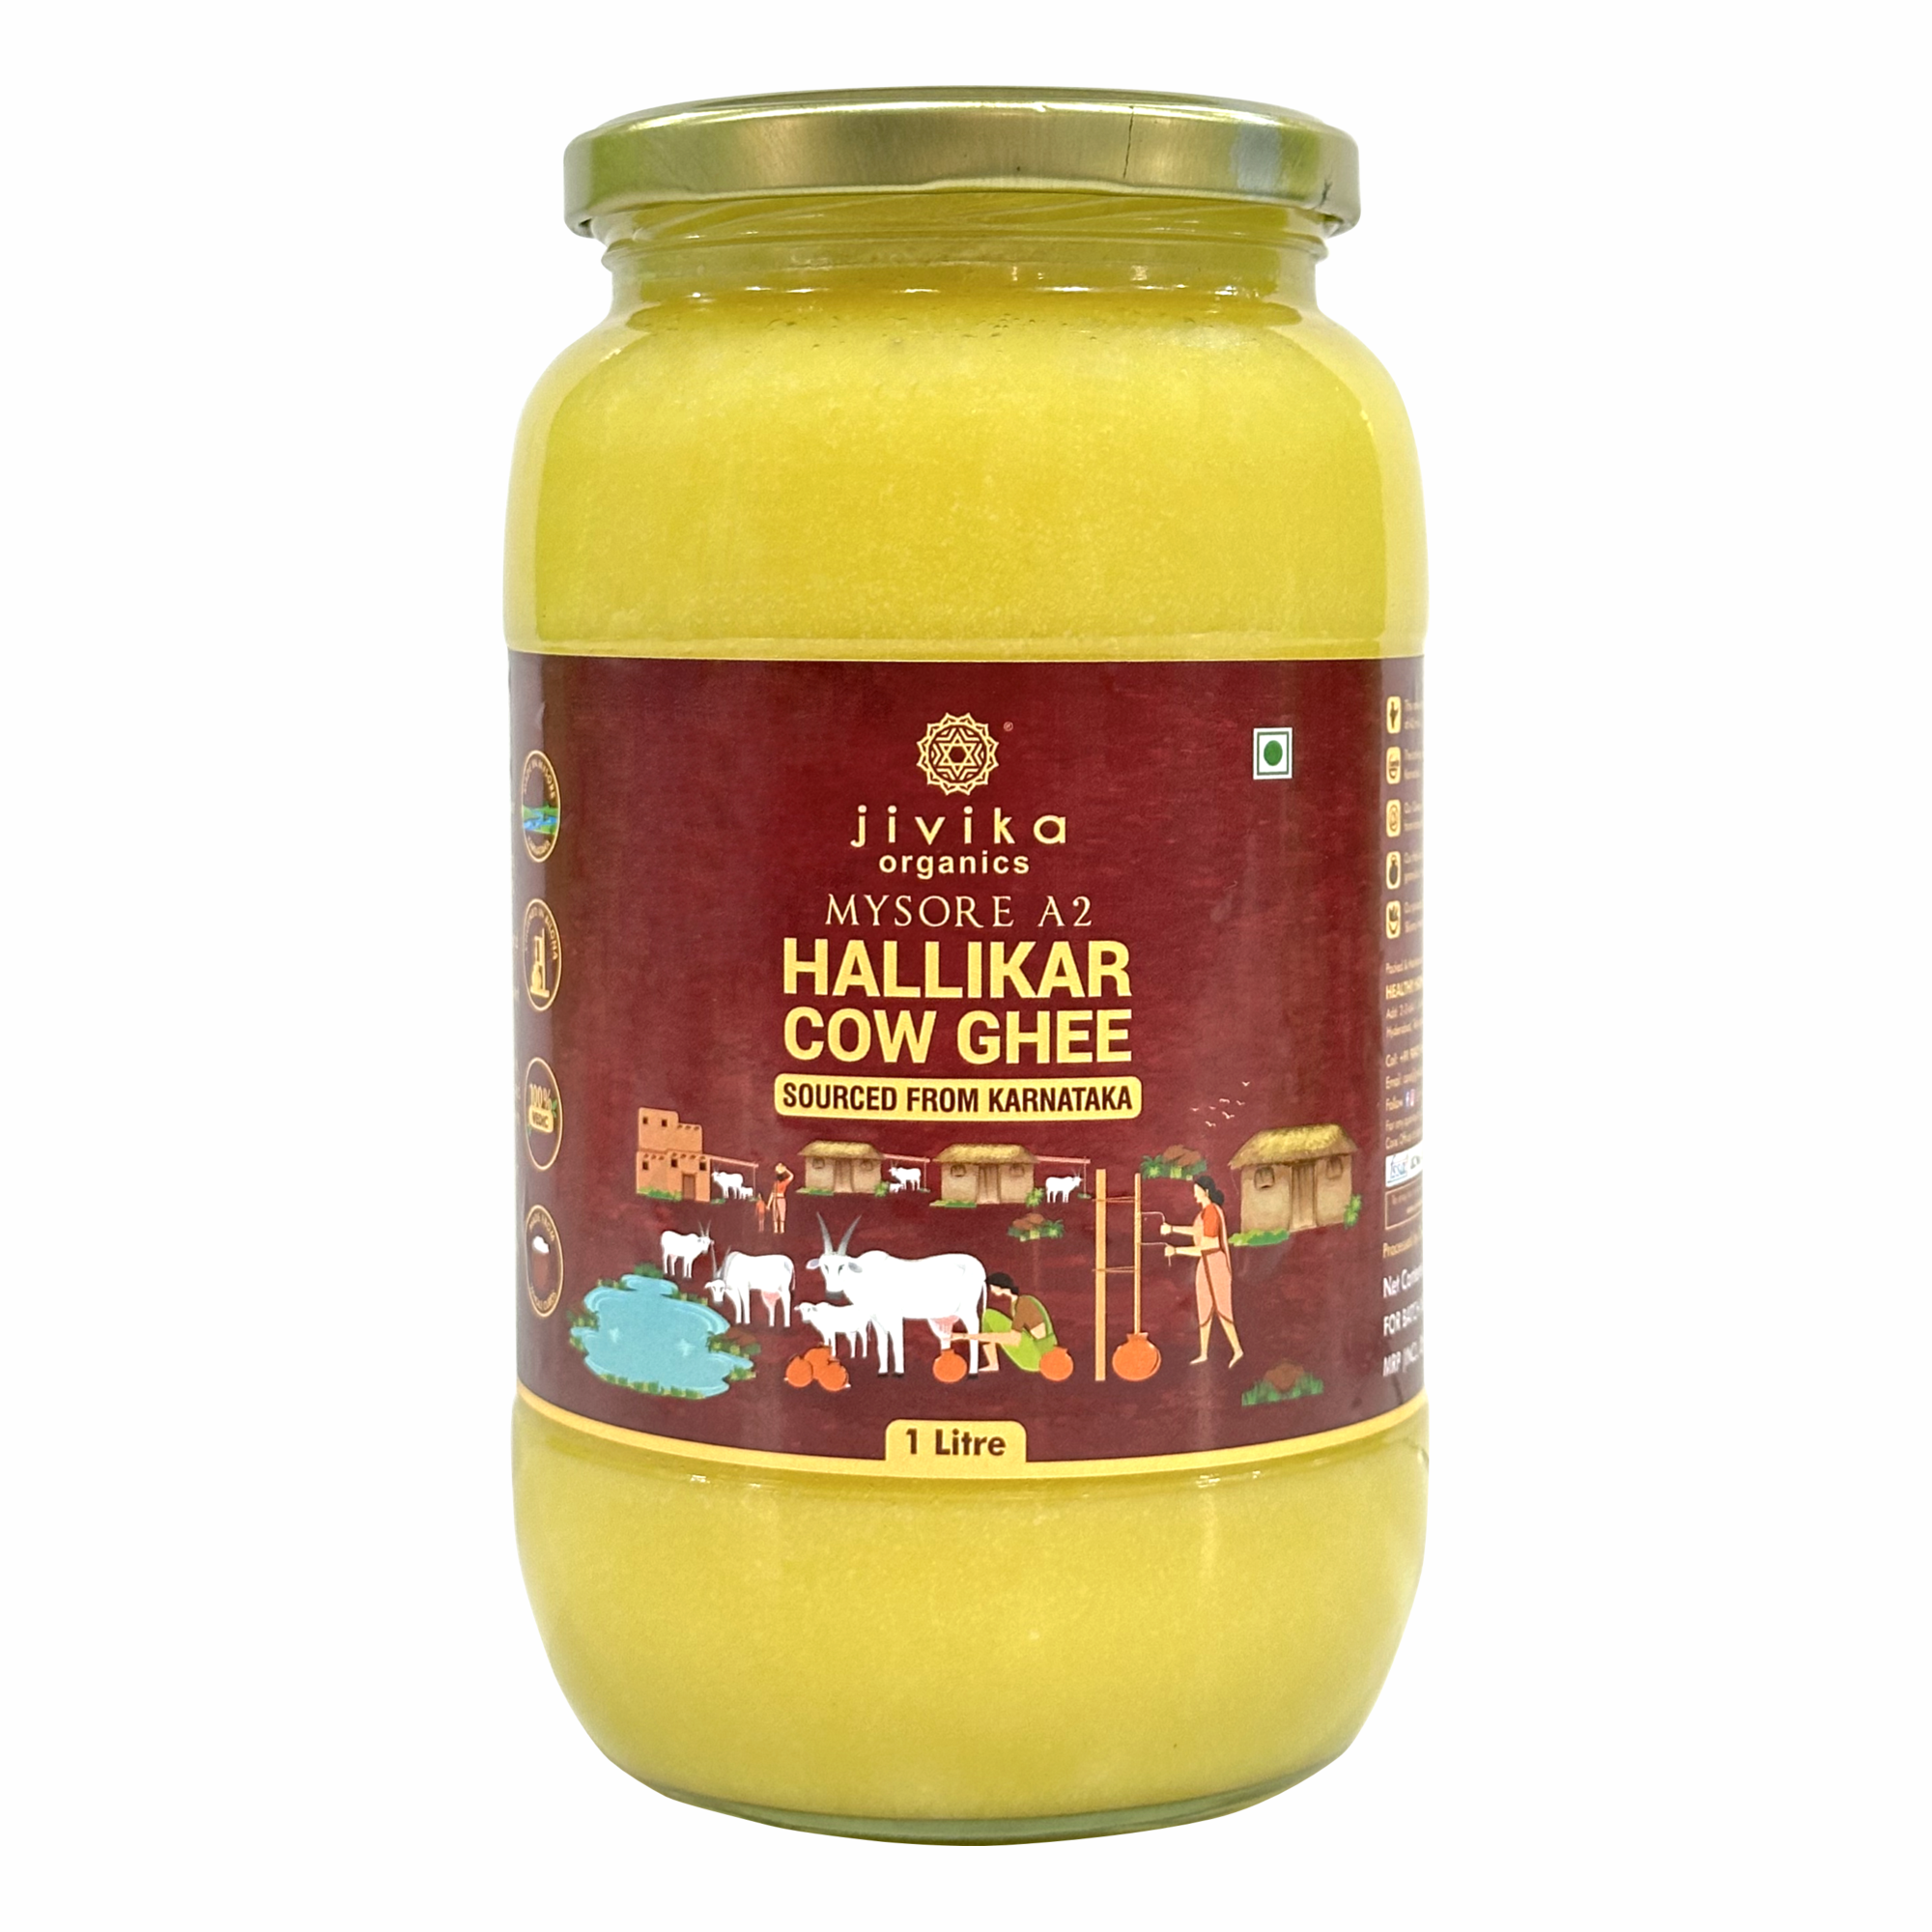 Mysore A2 Hallikar Cow Ghee 1000ml | Vedic Bilona Ghee from Karnataka | Hand-churned from Whole Curds